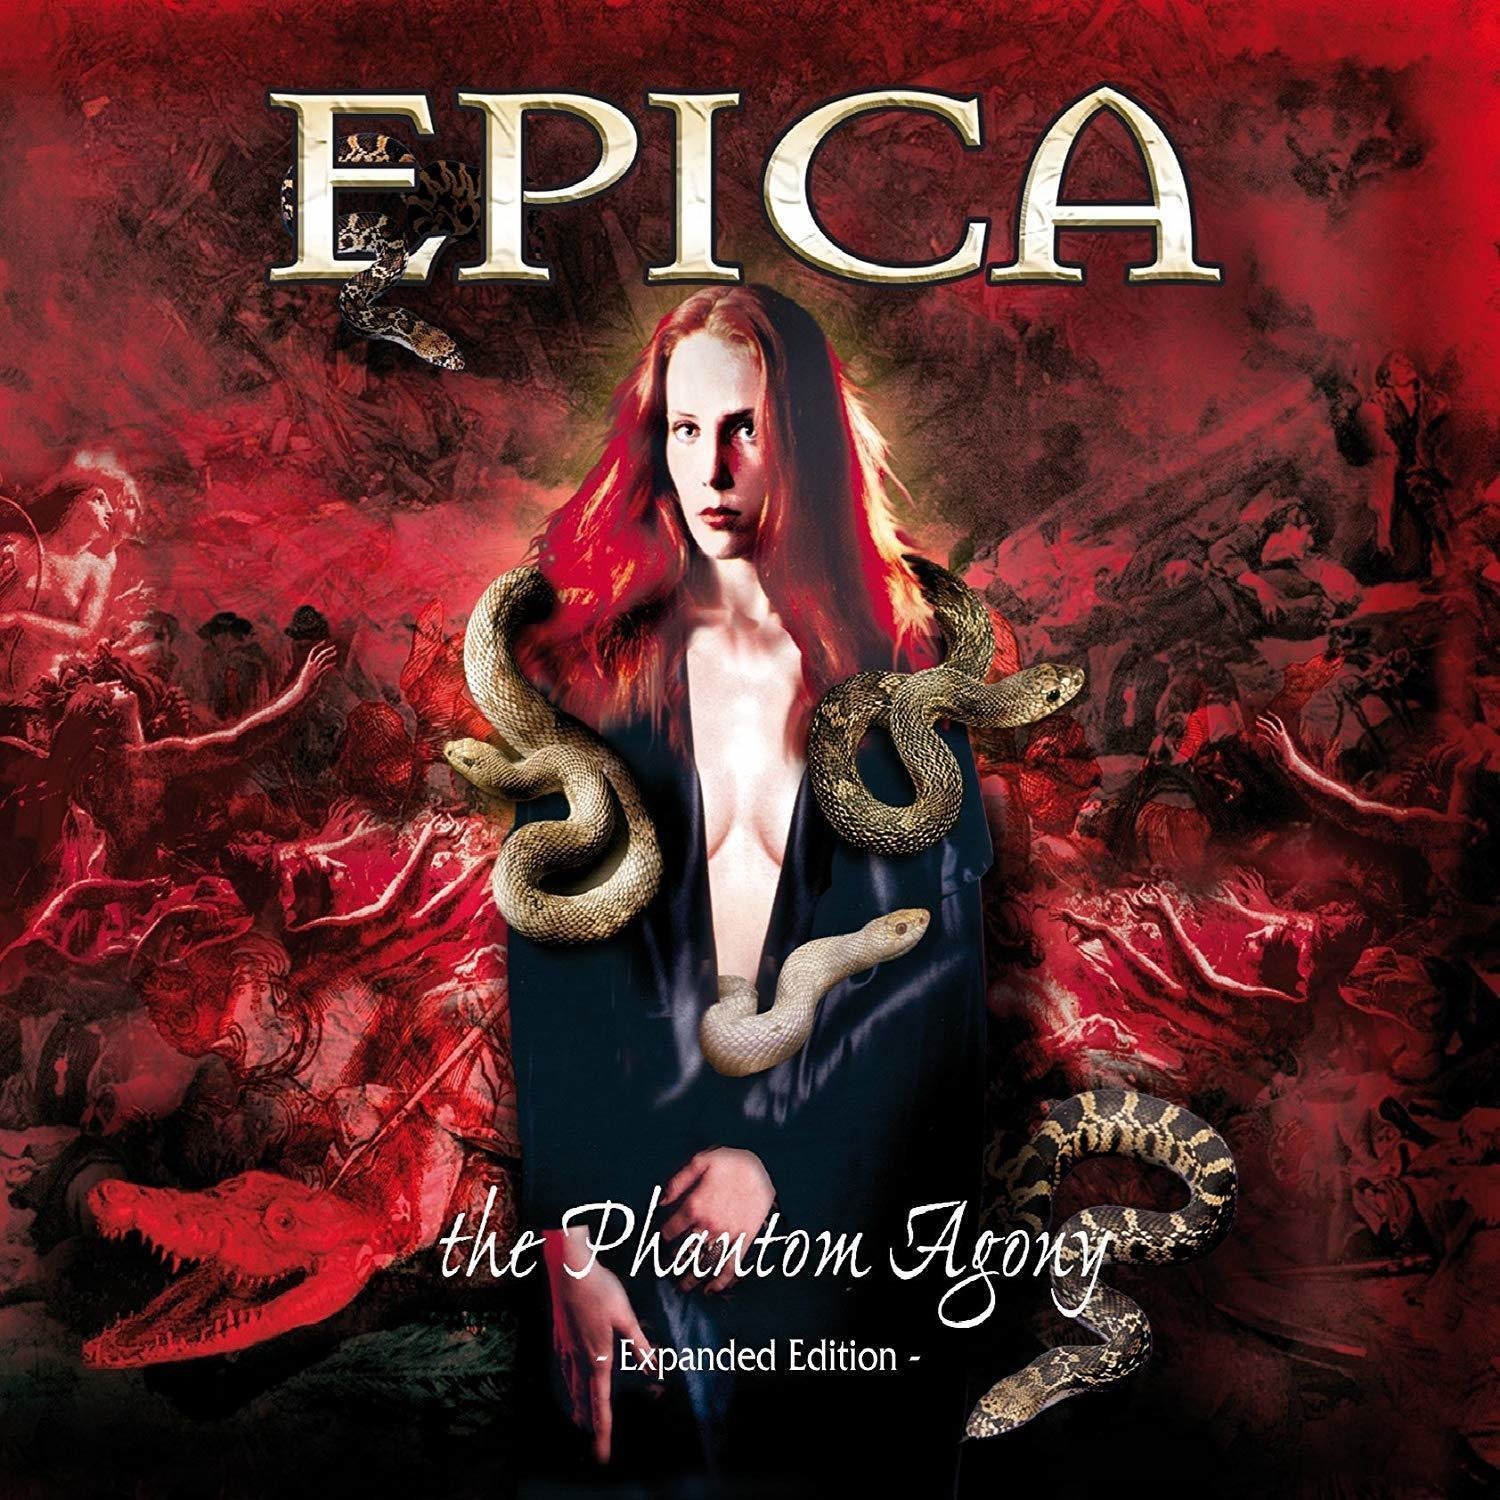 Vinyl Record Epica - The Phantom Agony - Expanded Edition (2 LP)